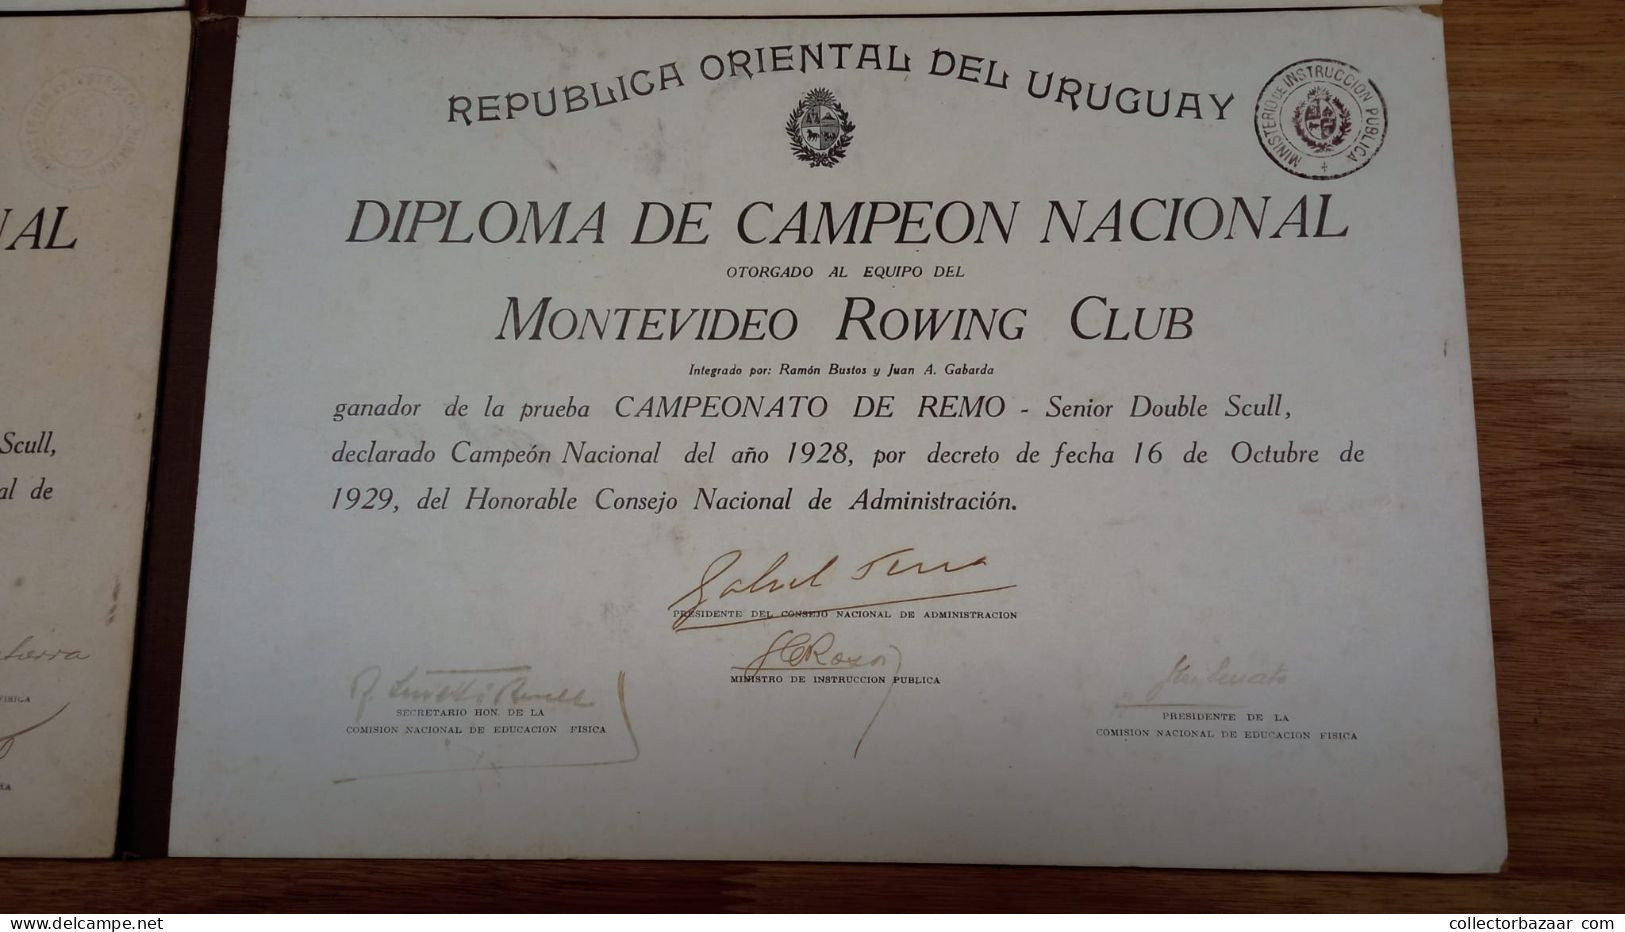 1926 - 1930 Uruguay National Rowing champion 4 diplomas with president of Republic autographs Brum Terra Serrato Nice